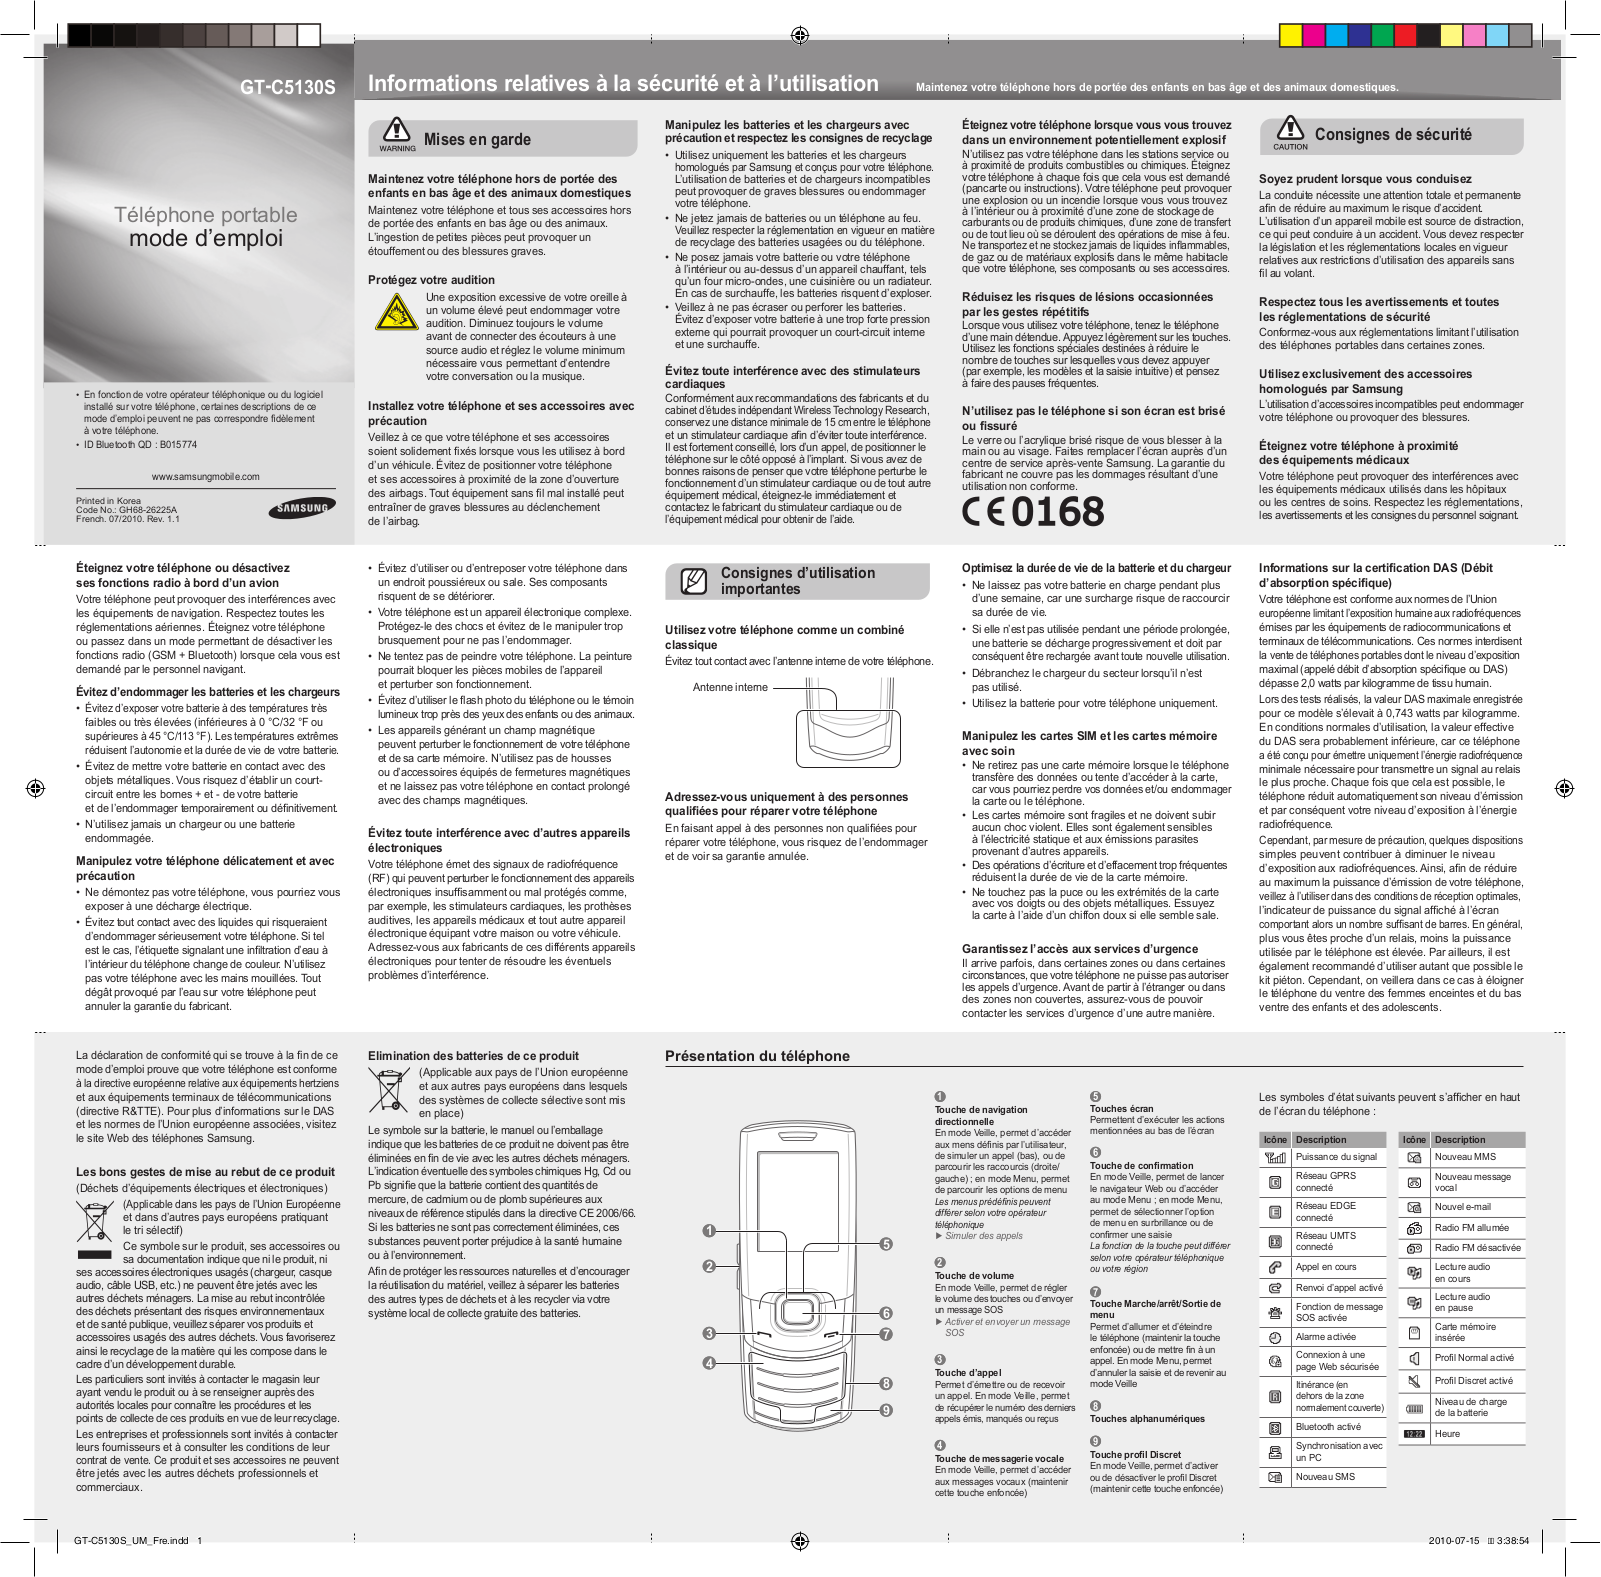 SAMSUNG GT-C5130S User Manual